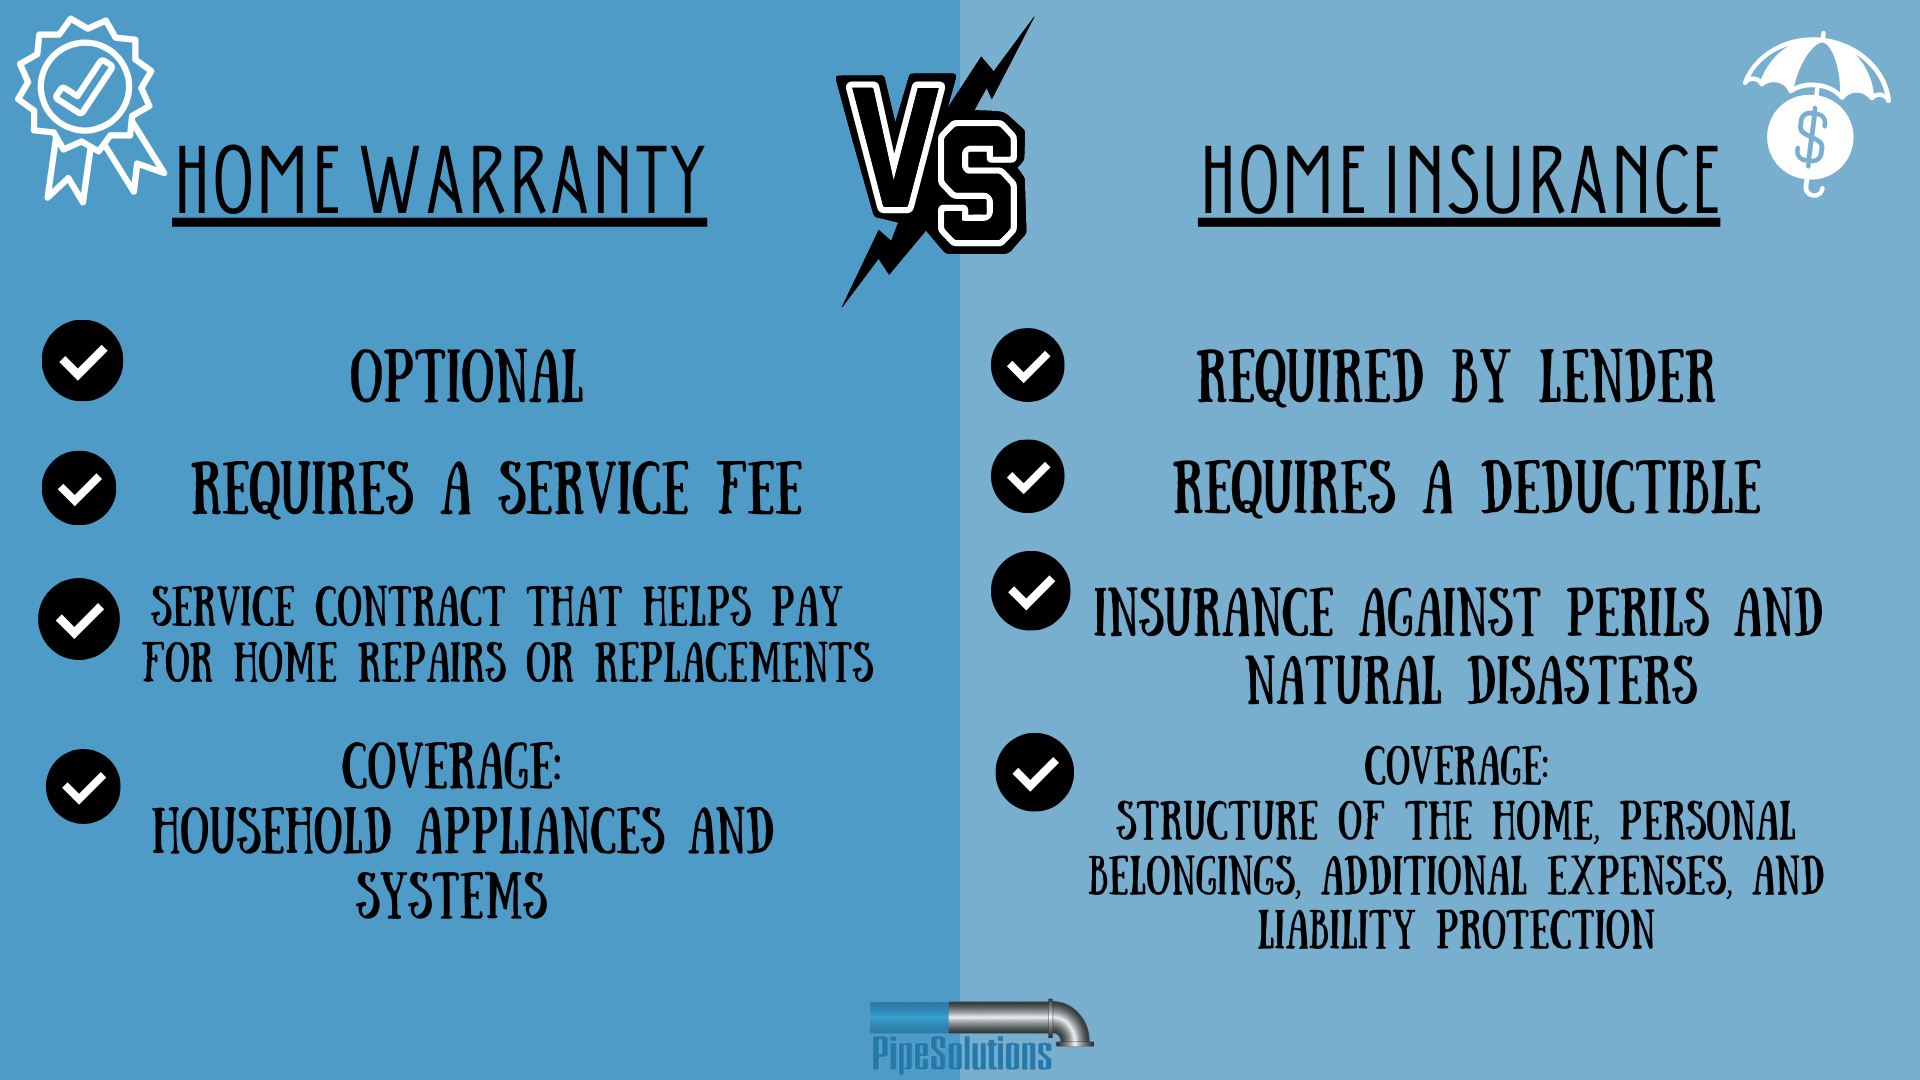 Home warranty vs home insurance